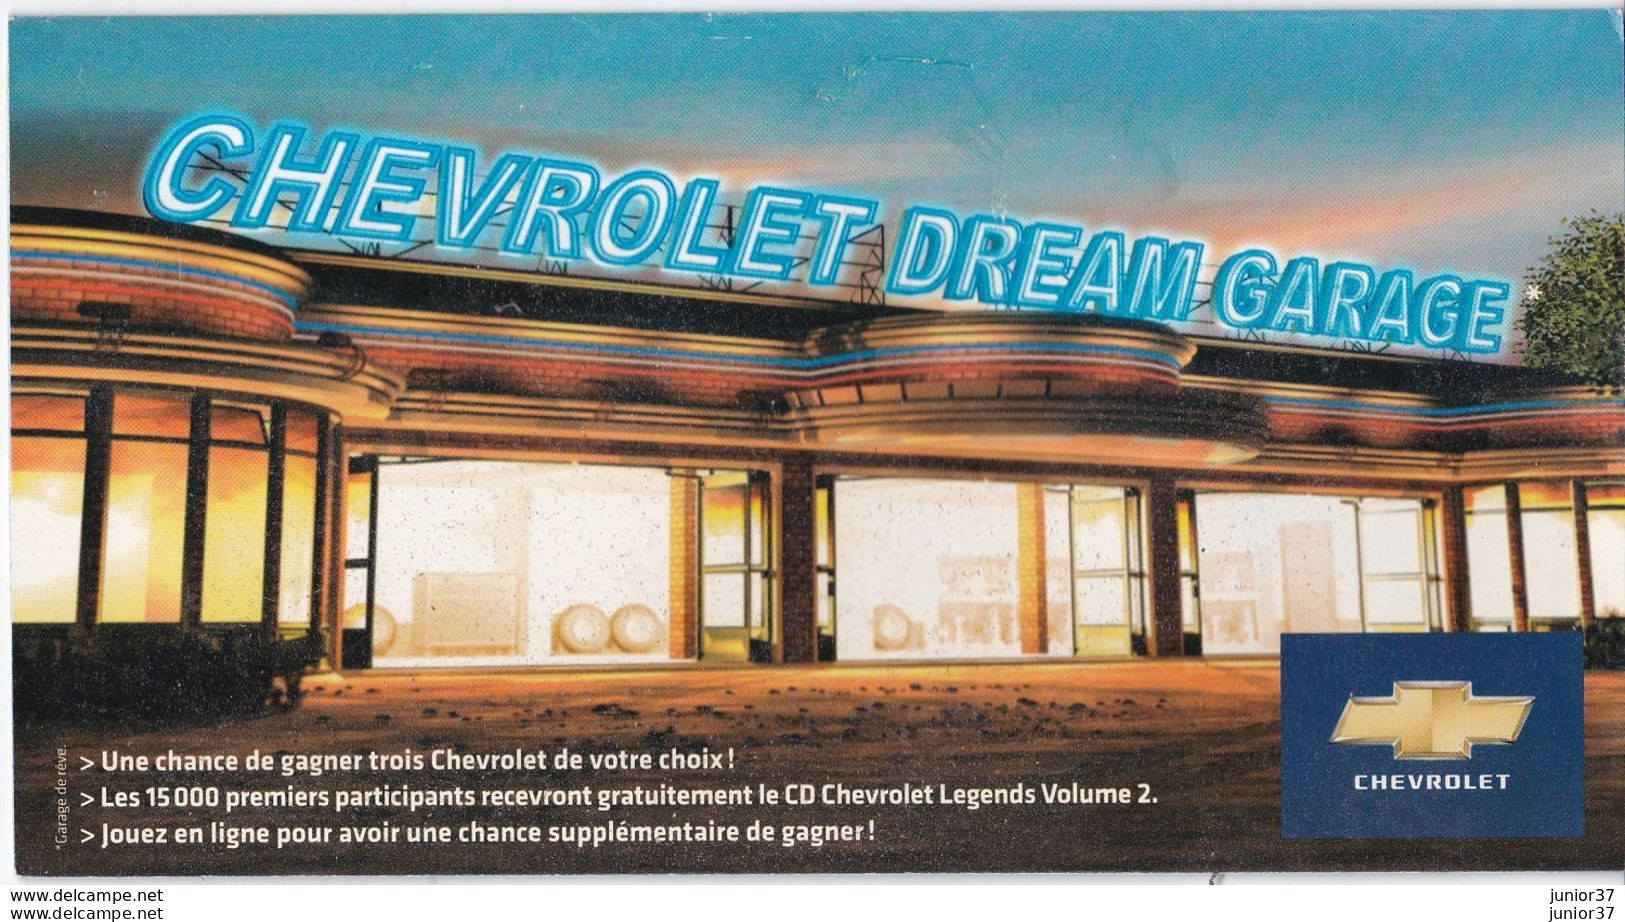 Dépliant Catalogue Chevrolet Dream Garage,Matiz,Avao, Lacetti,Nubira Sw,HRS,Epica,Captiva 2008 - Advertising